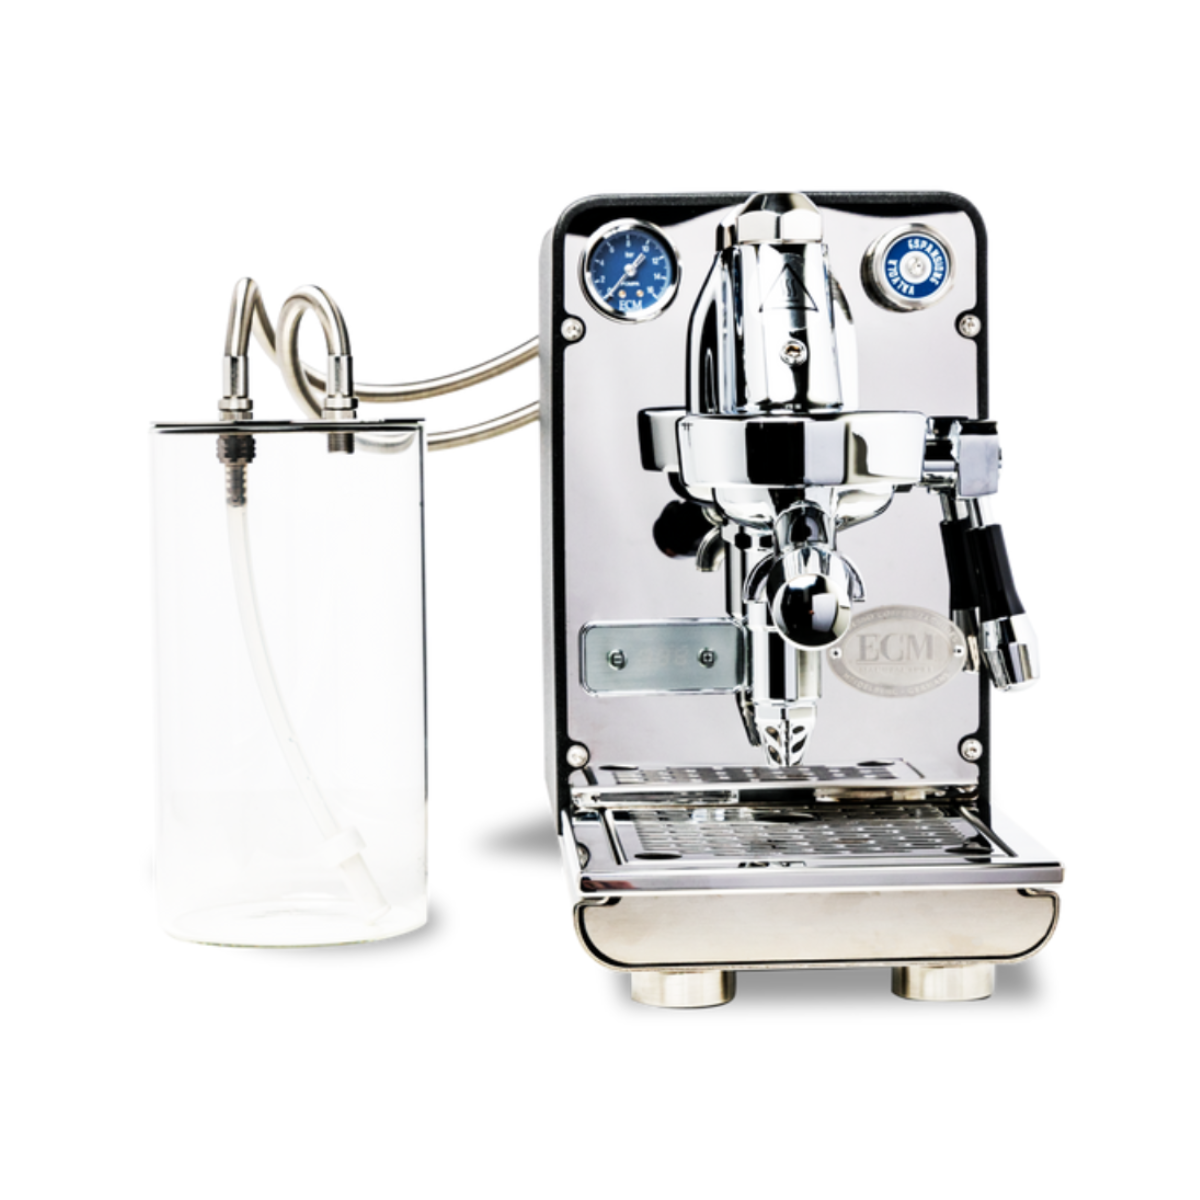 ECM Puristika espresso machine